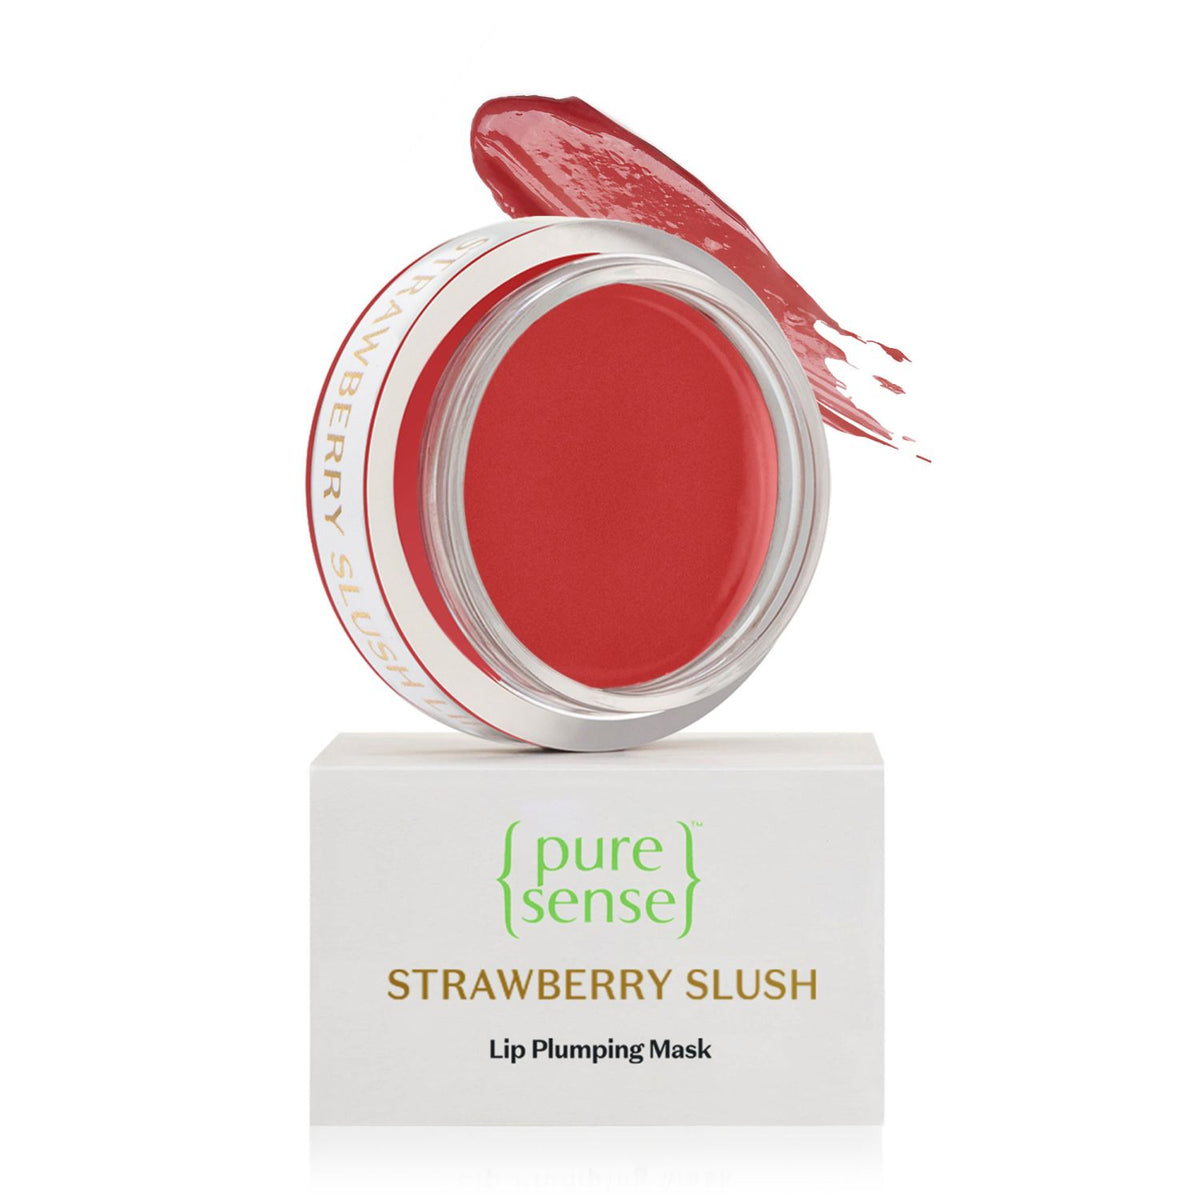 Strawberry Slush Lip Plumping Mask | From the makers of Parachute Advansed | 5ml